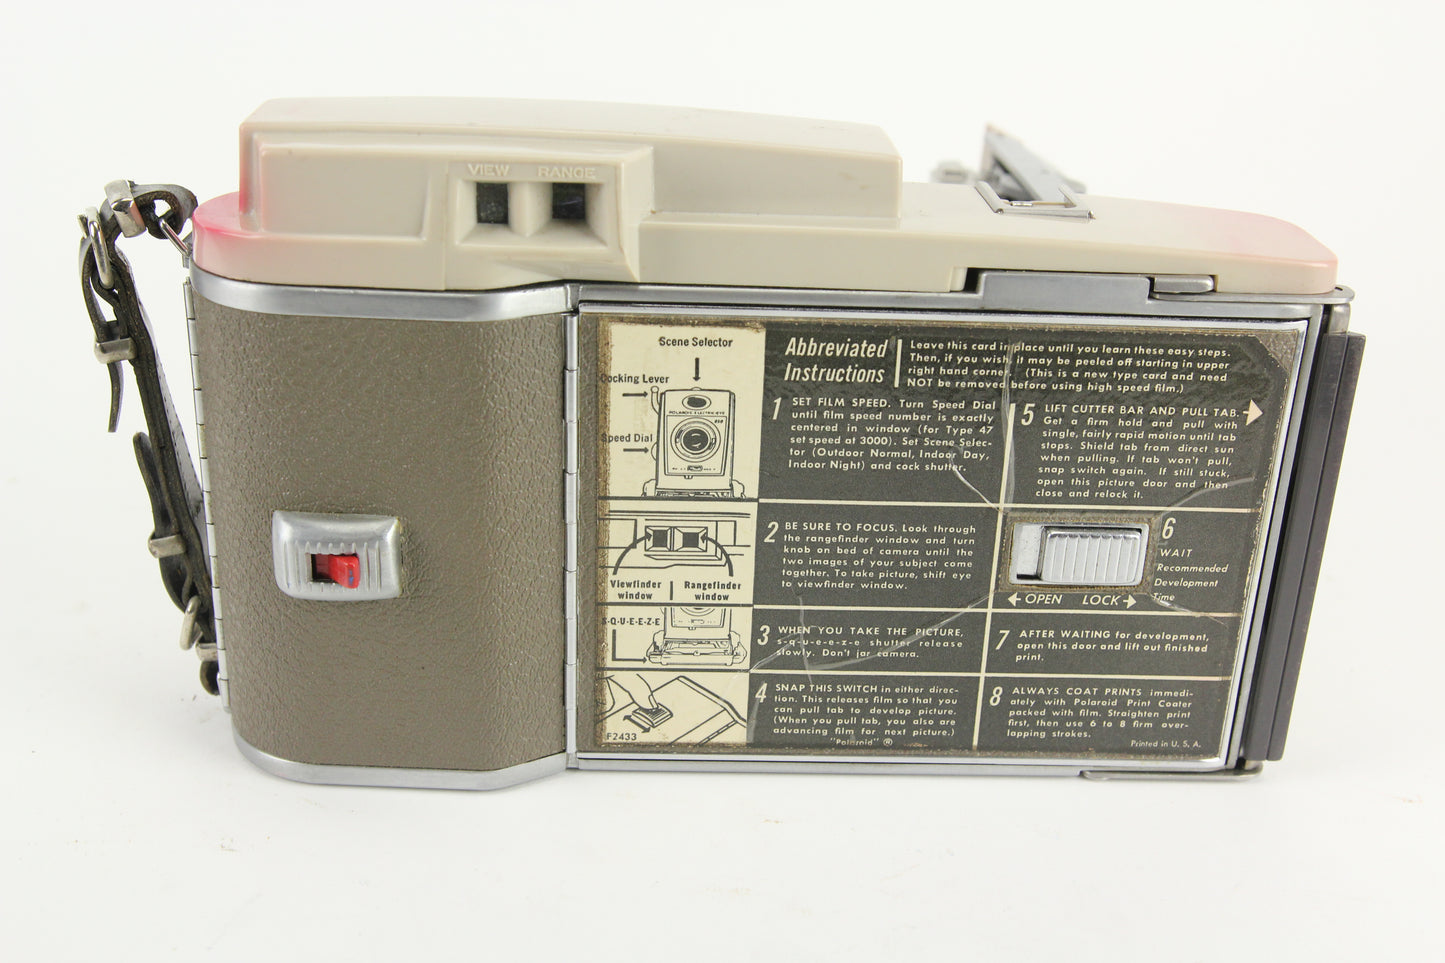 Polaroid 850 Electric Eye Land Camera Folding Instant Camera